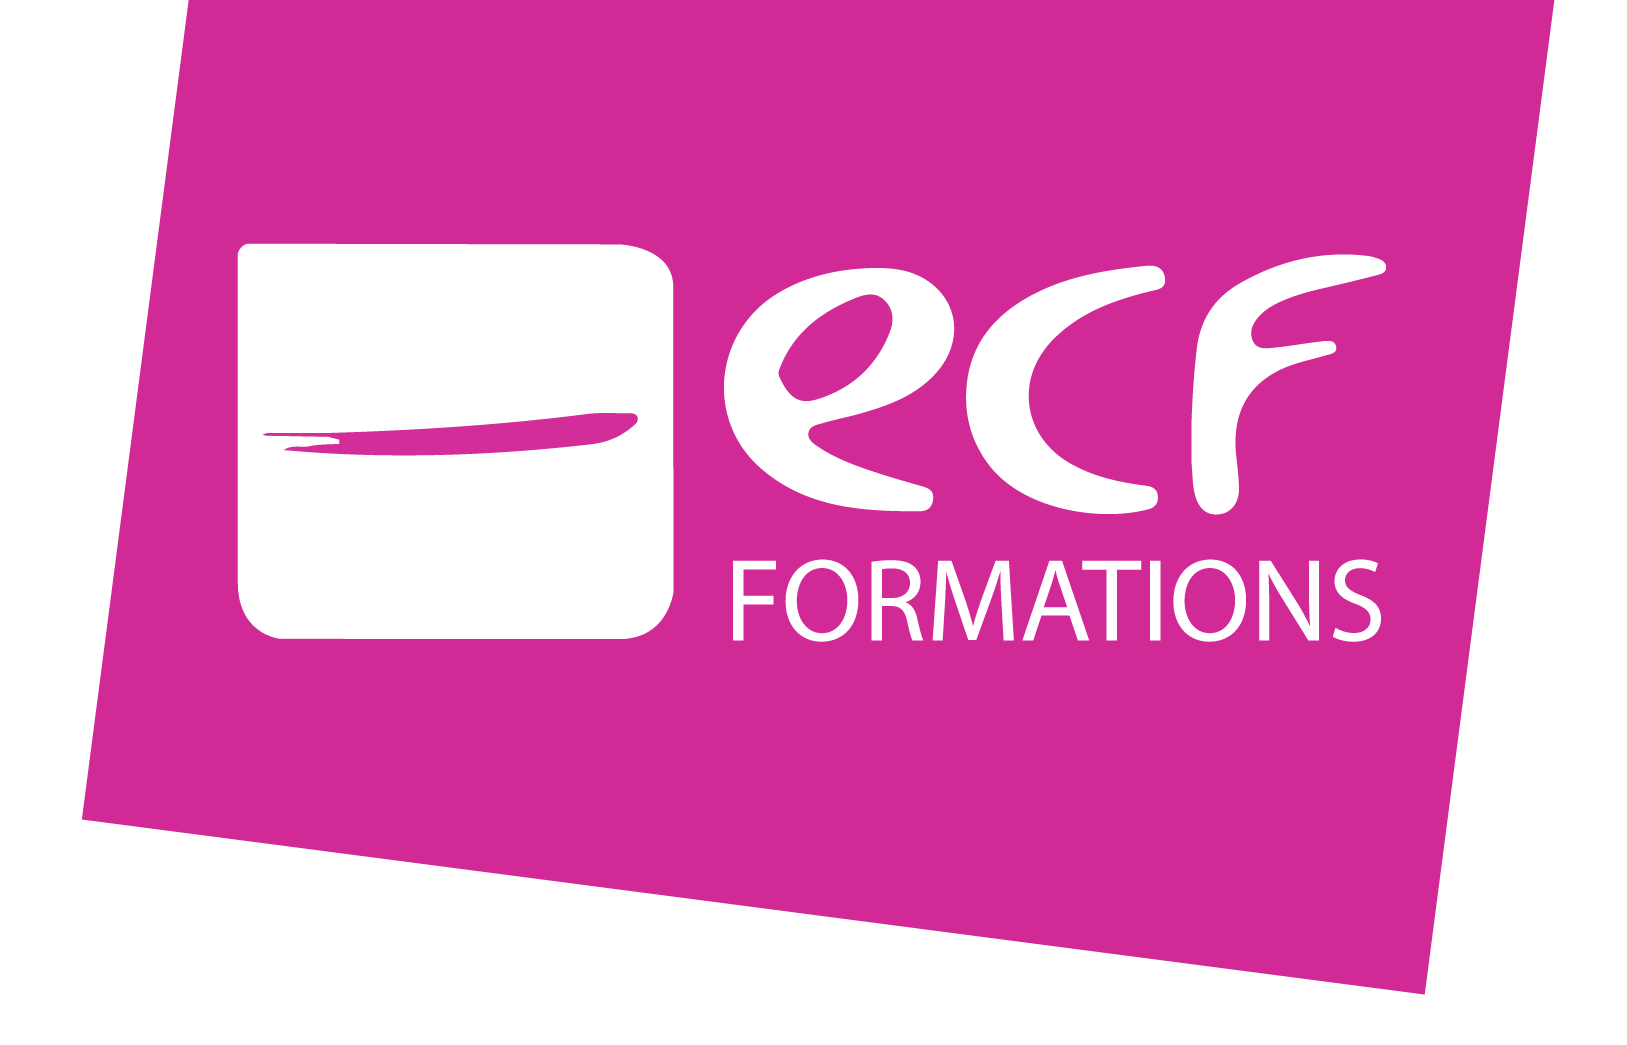 logo_ecf_Formations_22